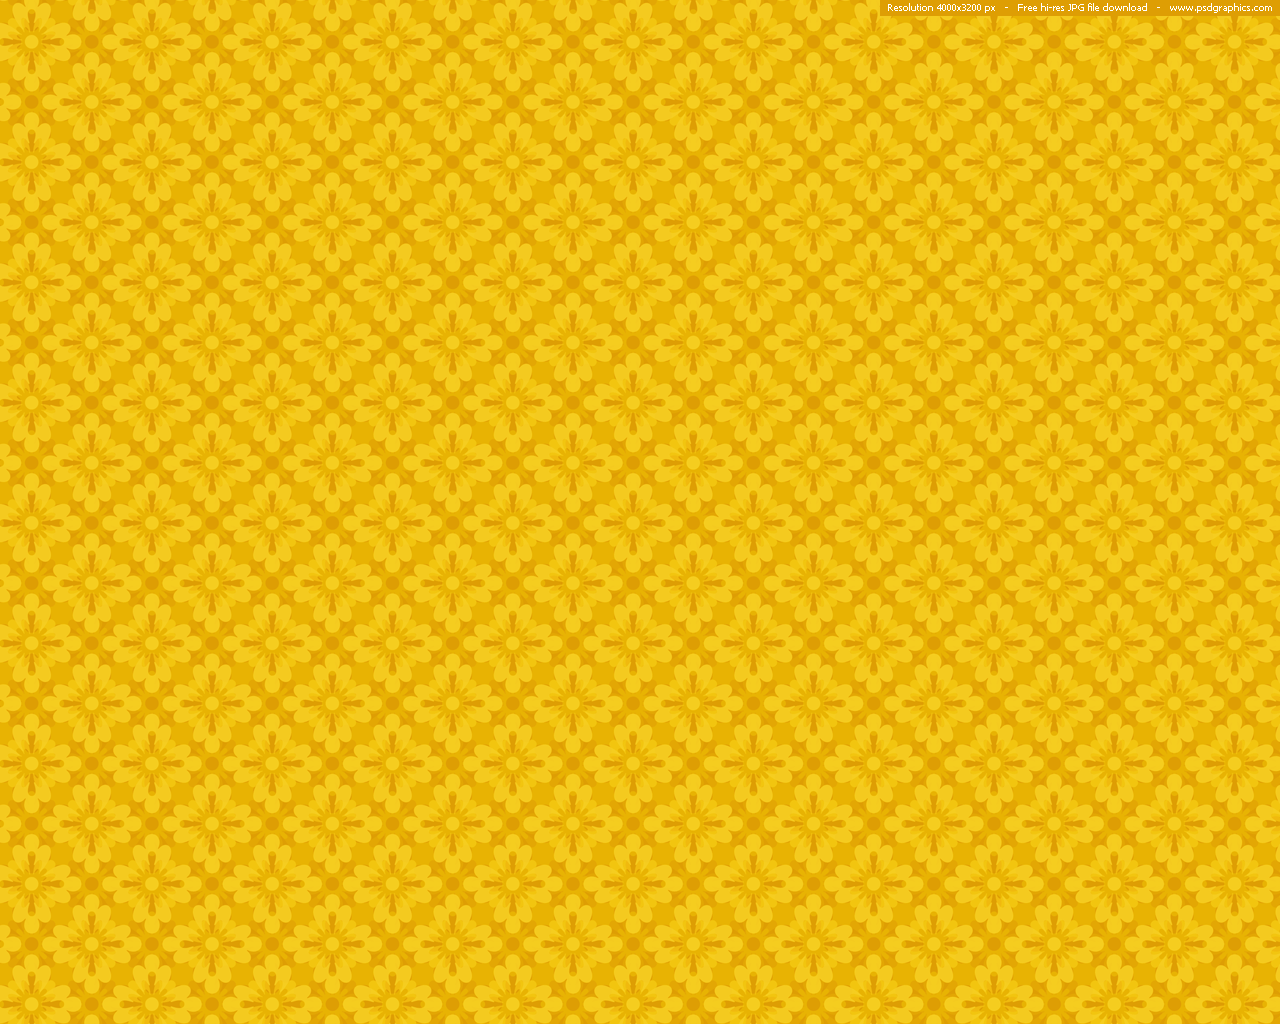 Gray and yellow Photohop patterns